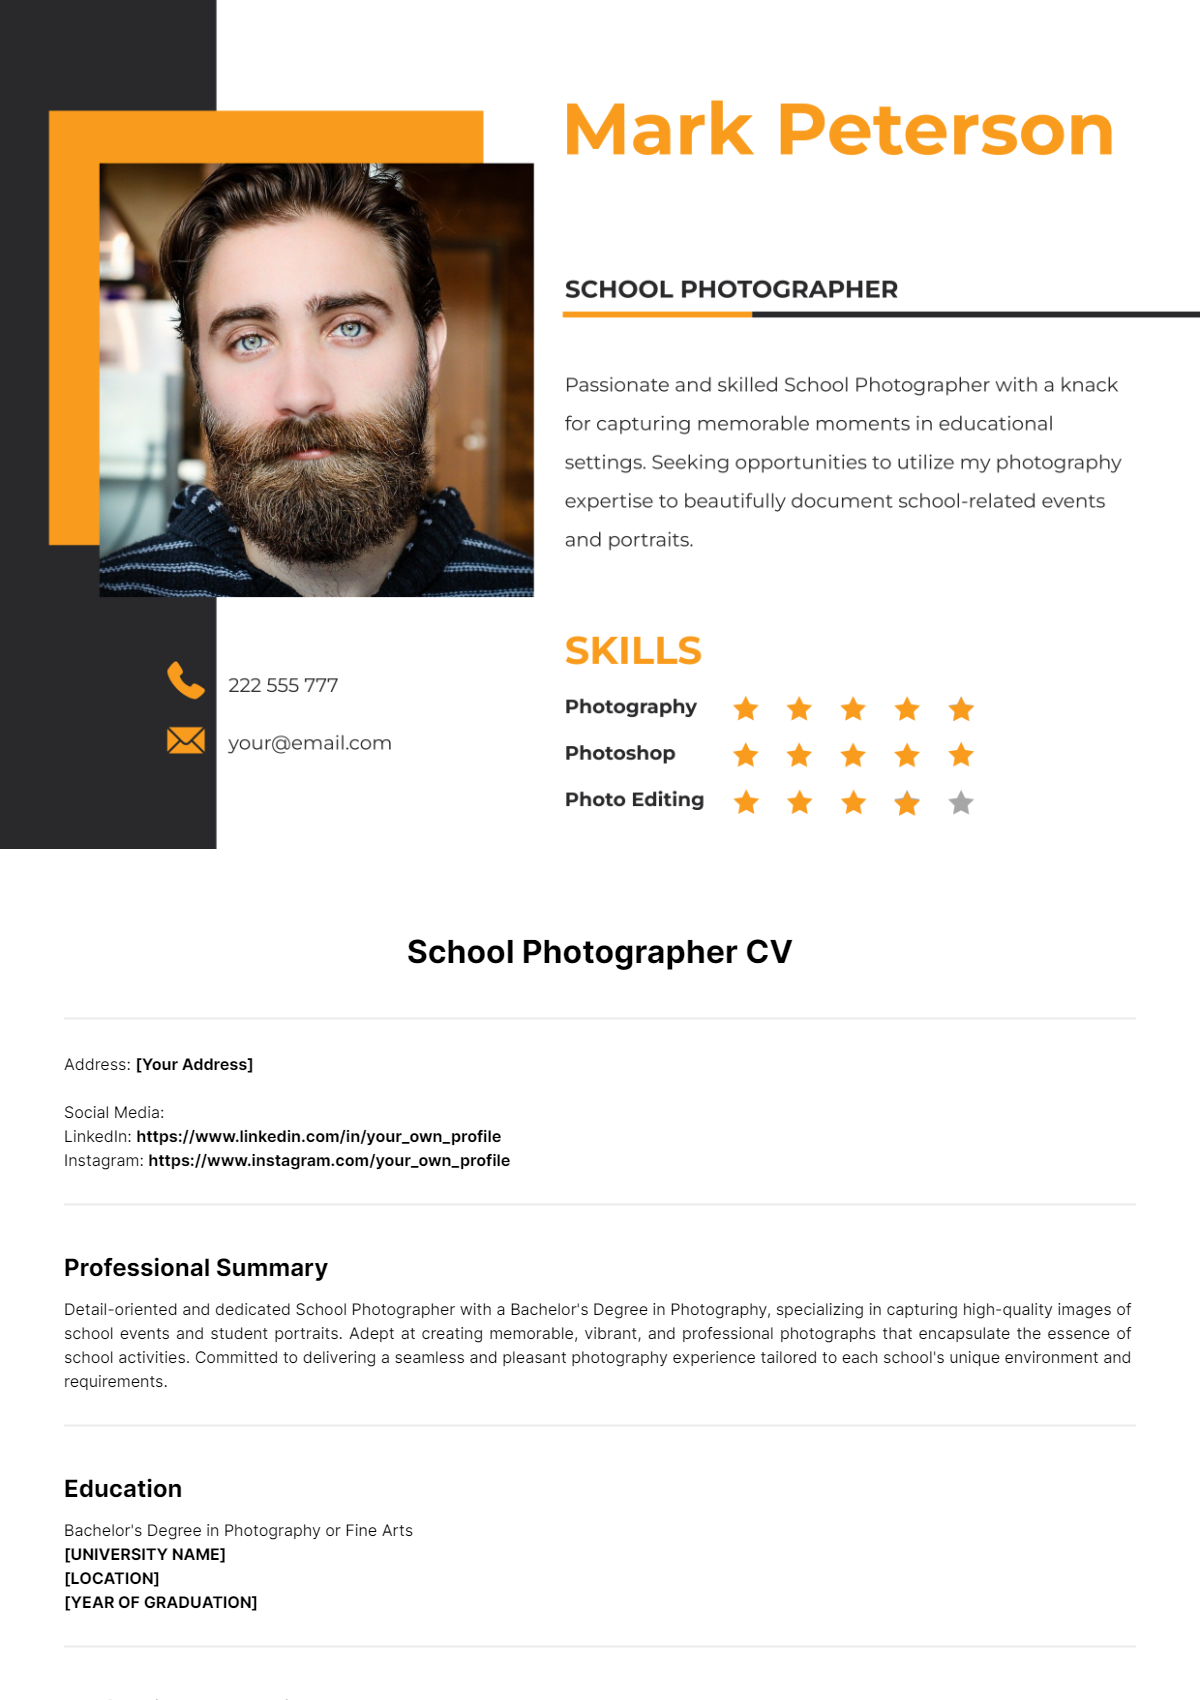 School Photographer CV Template